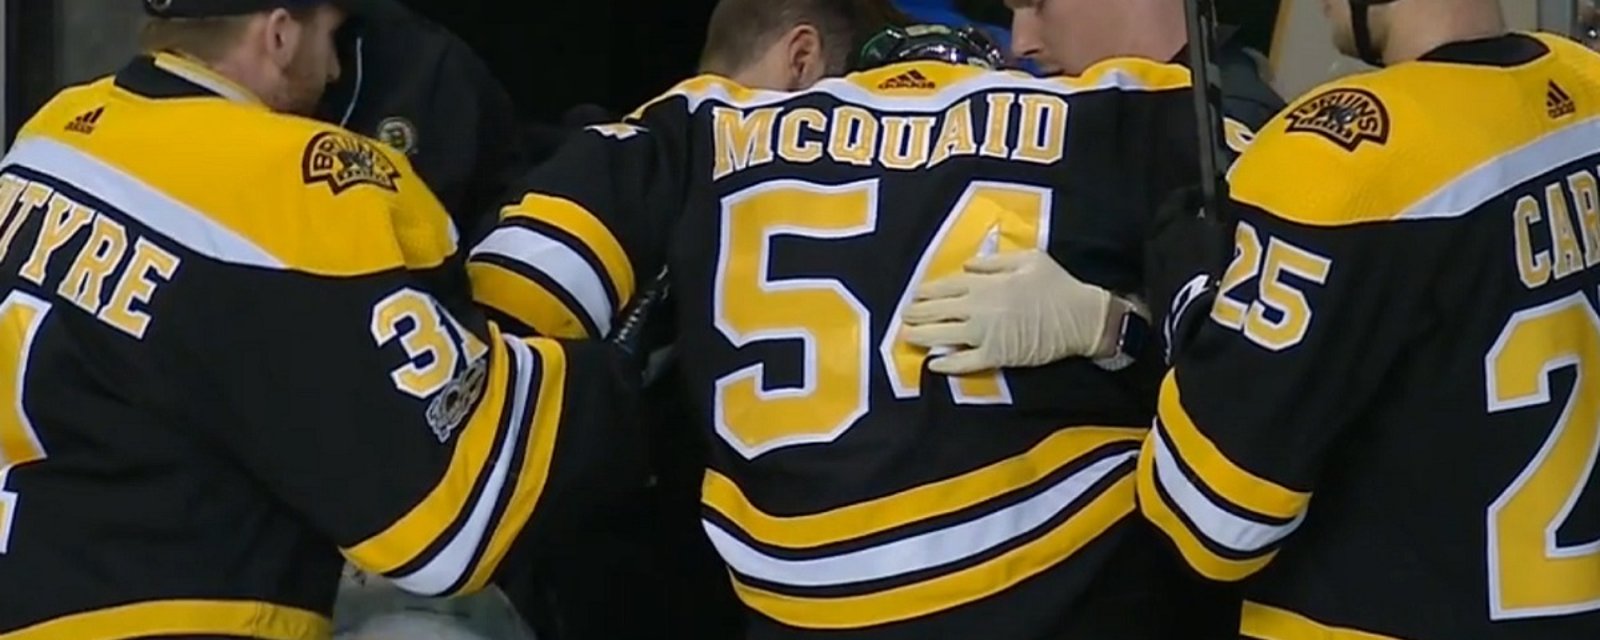 Video shows how Bruins Adam McQuaid broke his leg on Thursday night.